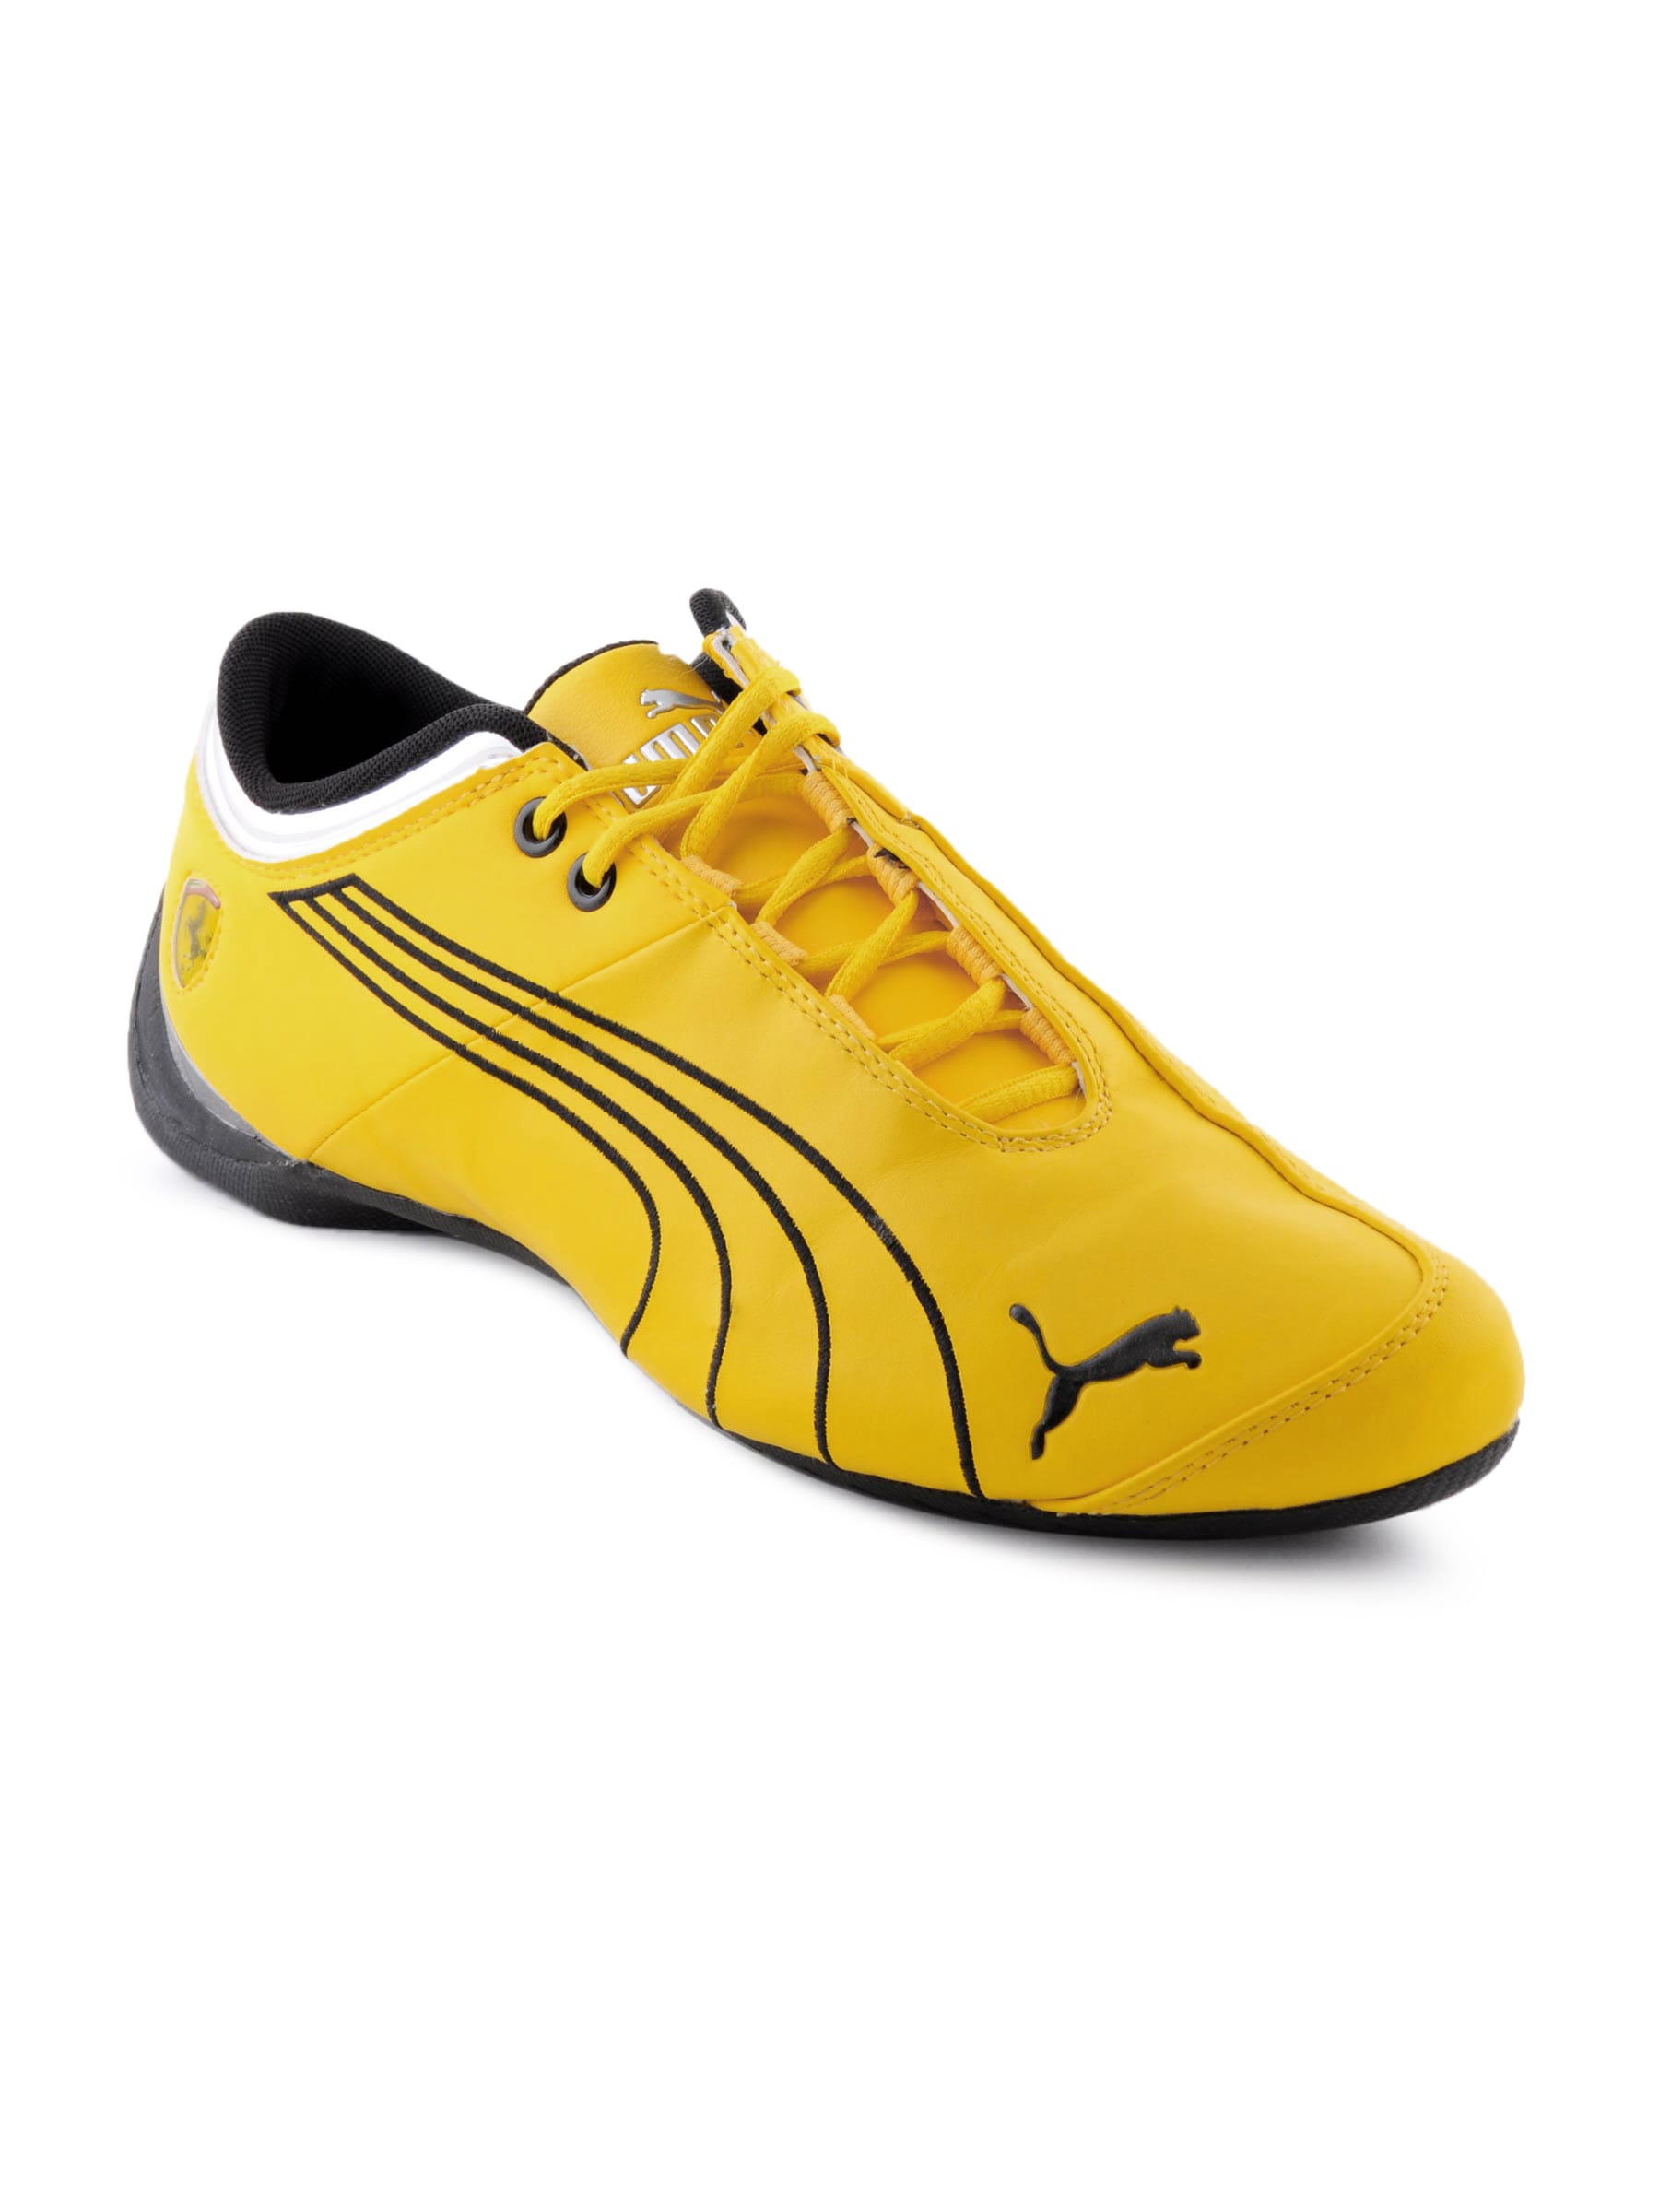 Puma Men Future Cat Yellow Casual Shoes